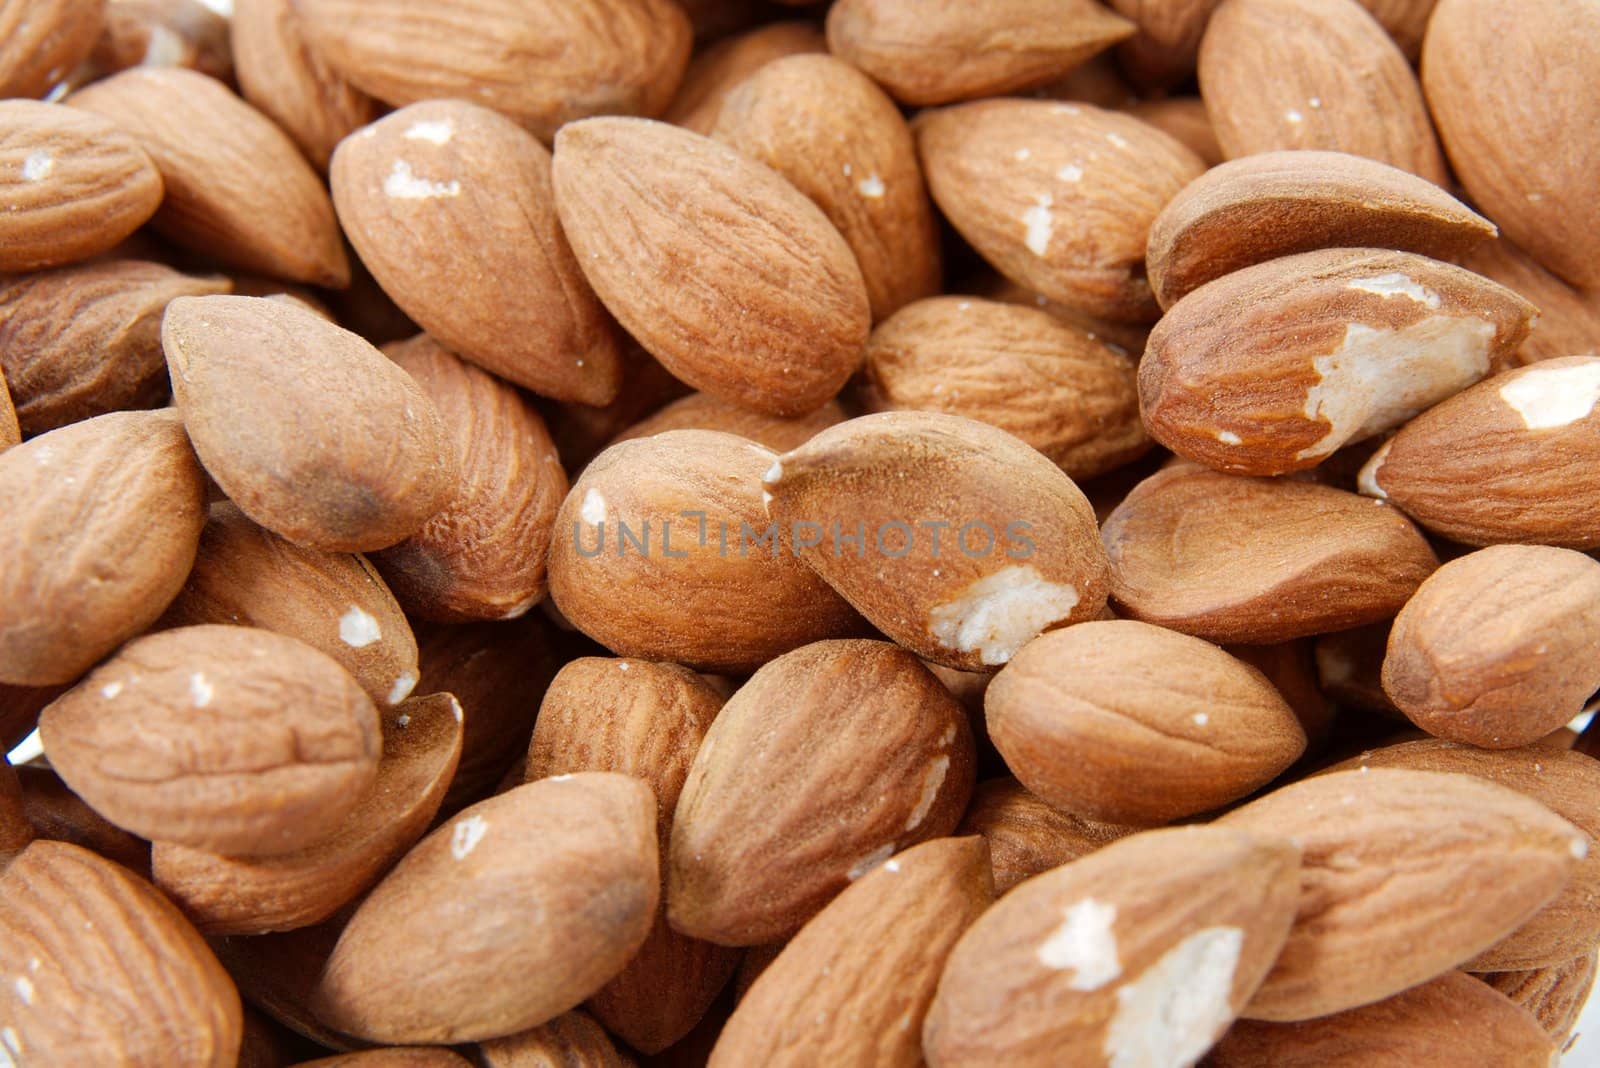 Closeup of a pile of almonds